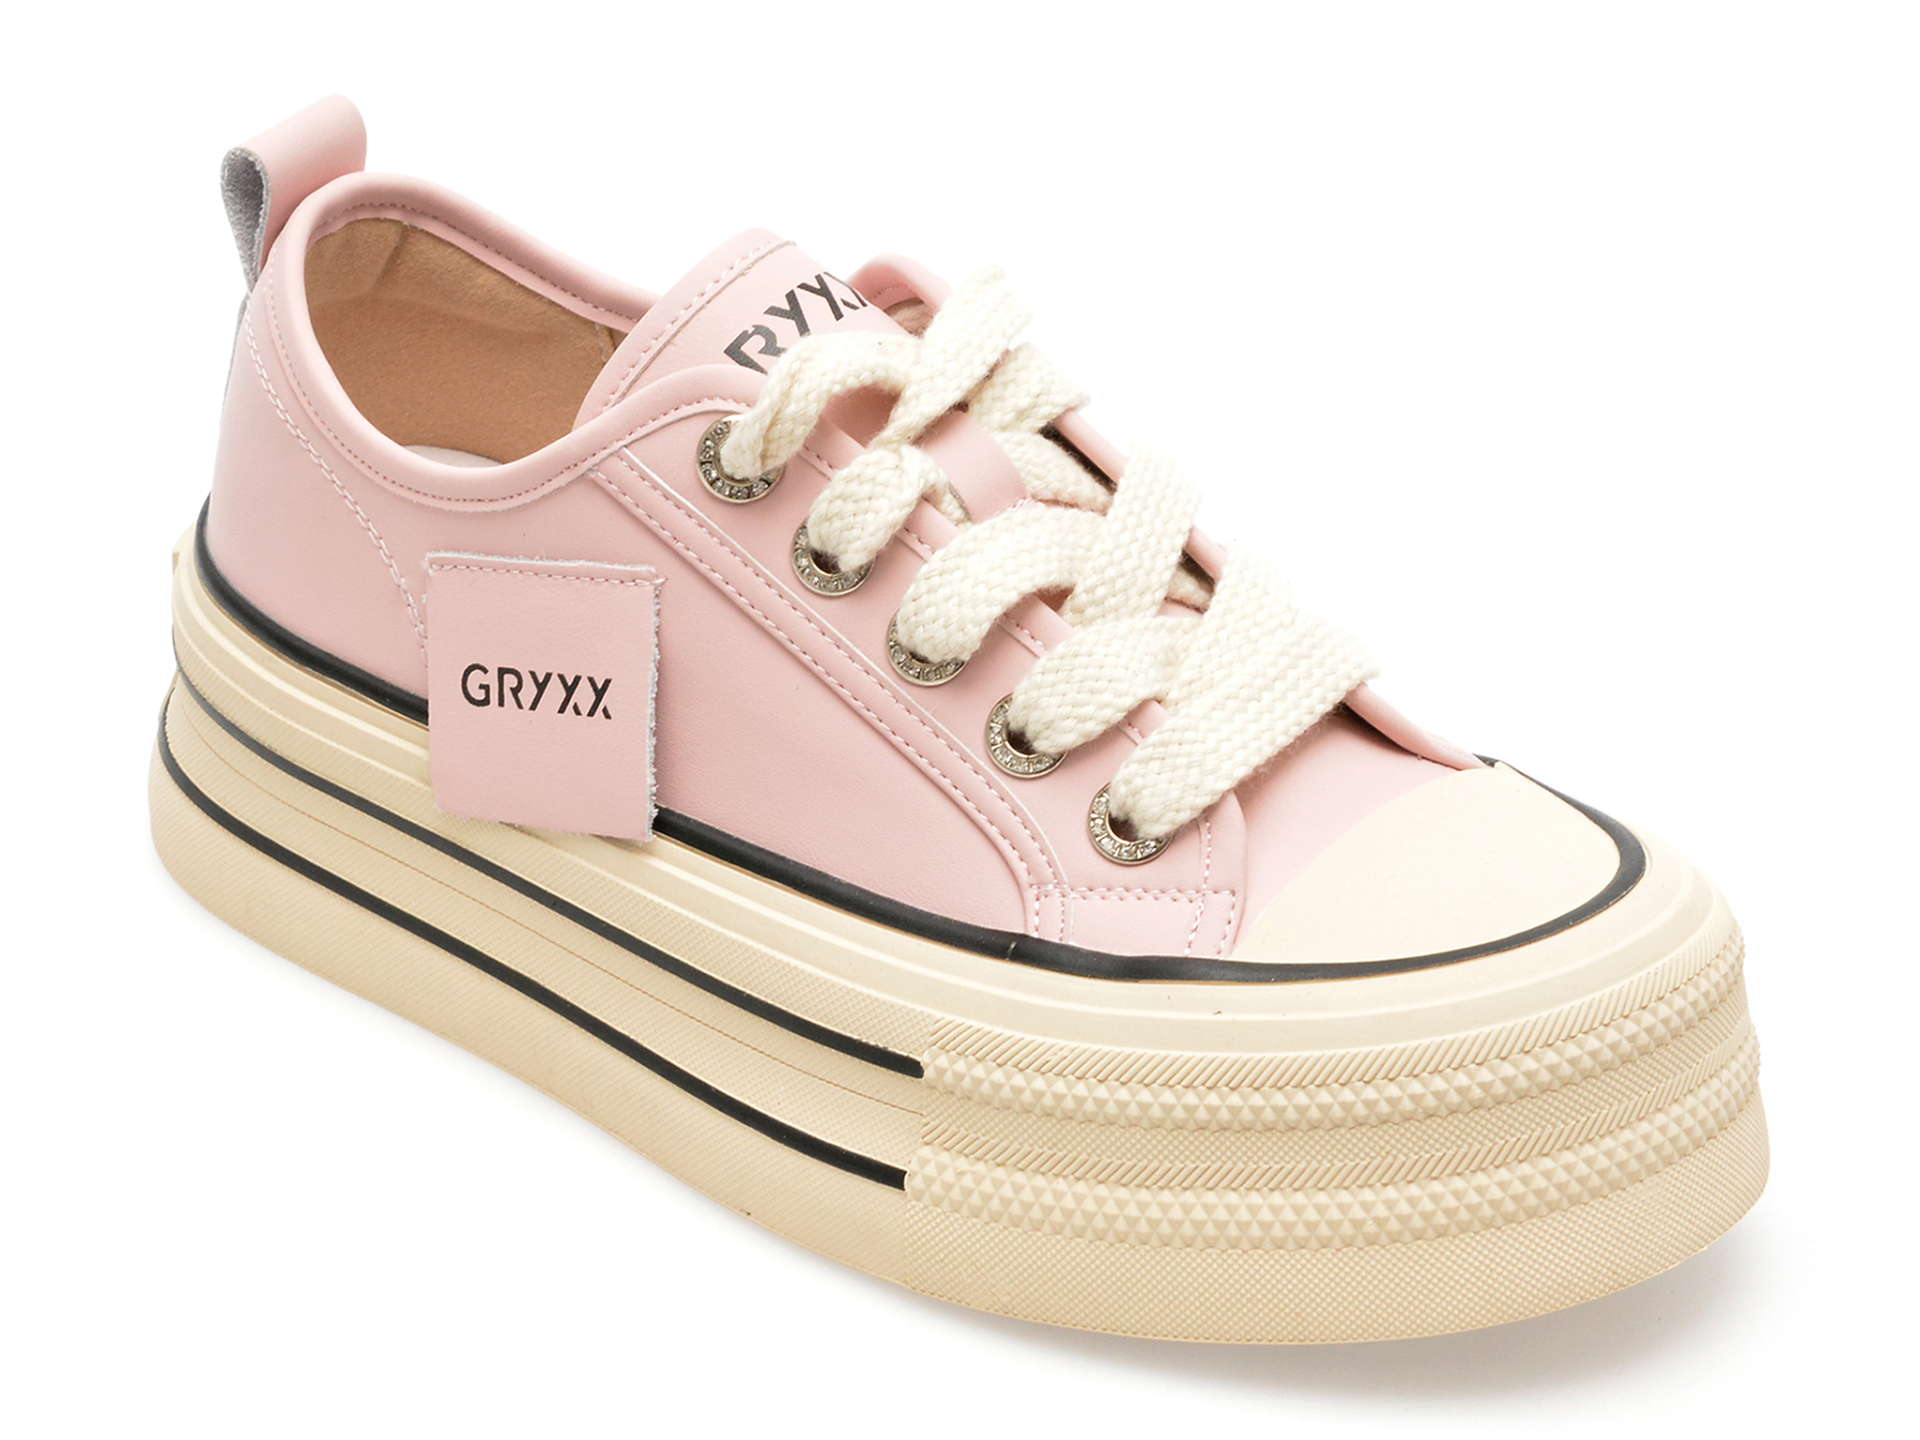 Pantofi GRYXX roz, 3013, din piele naturala Gryxx